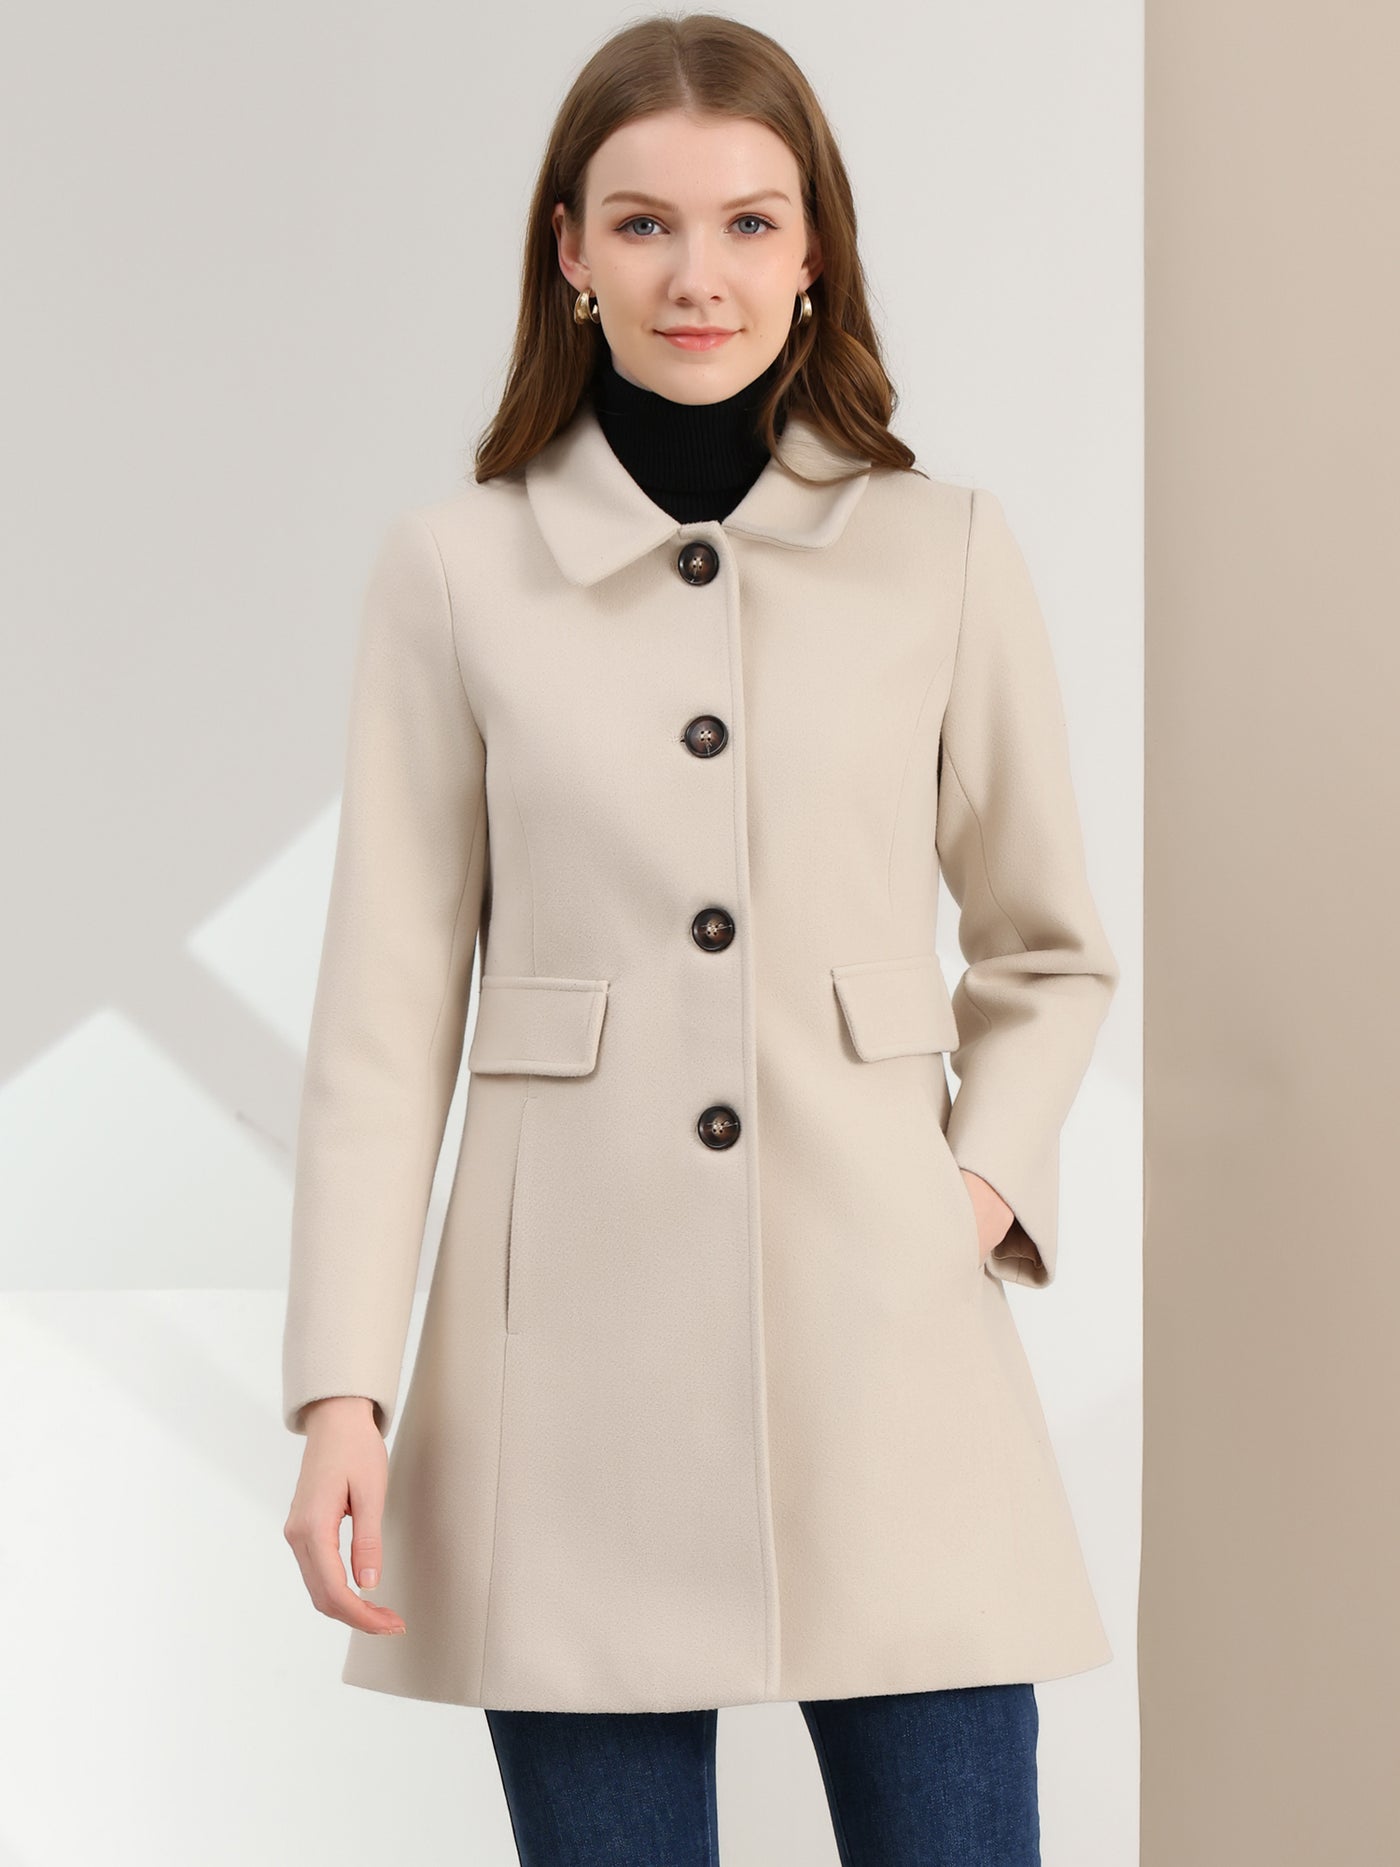 Allegra K Winter Overcoat Peter Pan Collar Single Breasted Outwear Pea Coat